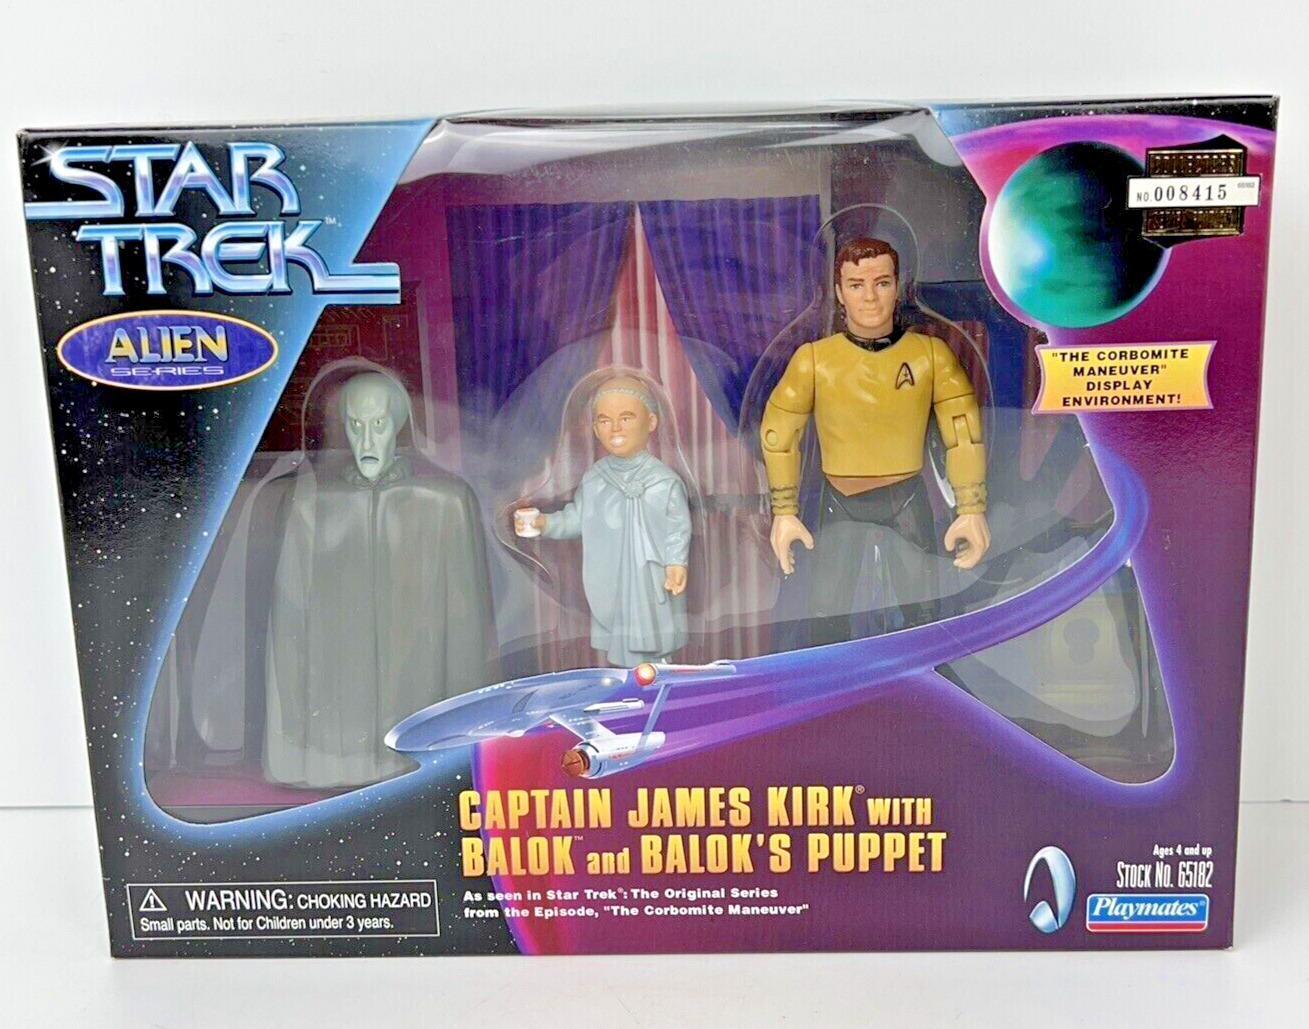 STAR TREK Alien Series Captain james Kirk with Balok and Puppet 1998 Playmates